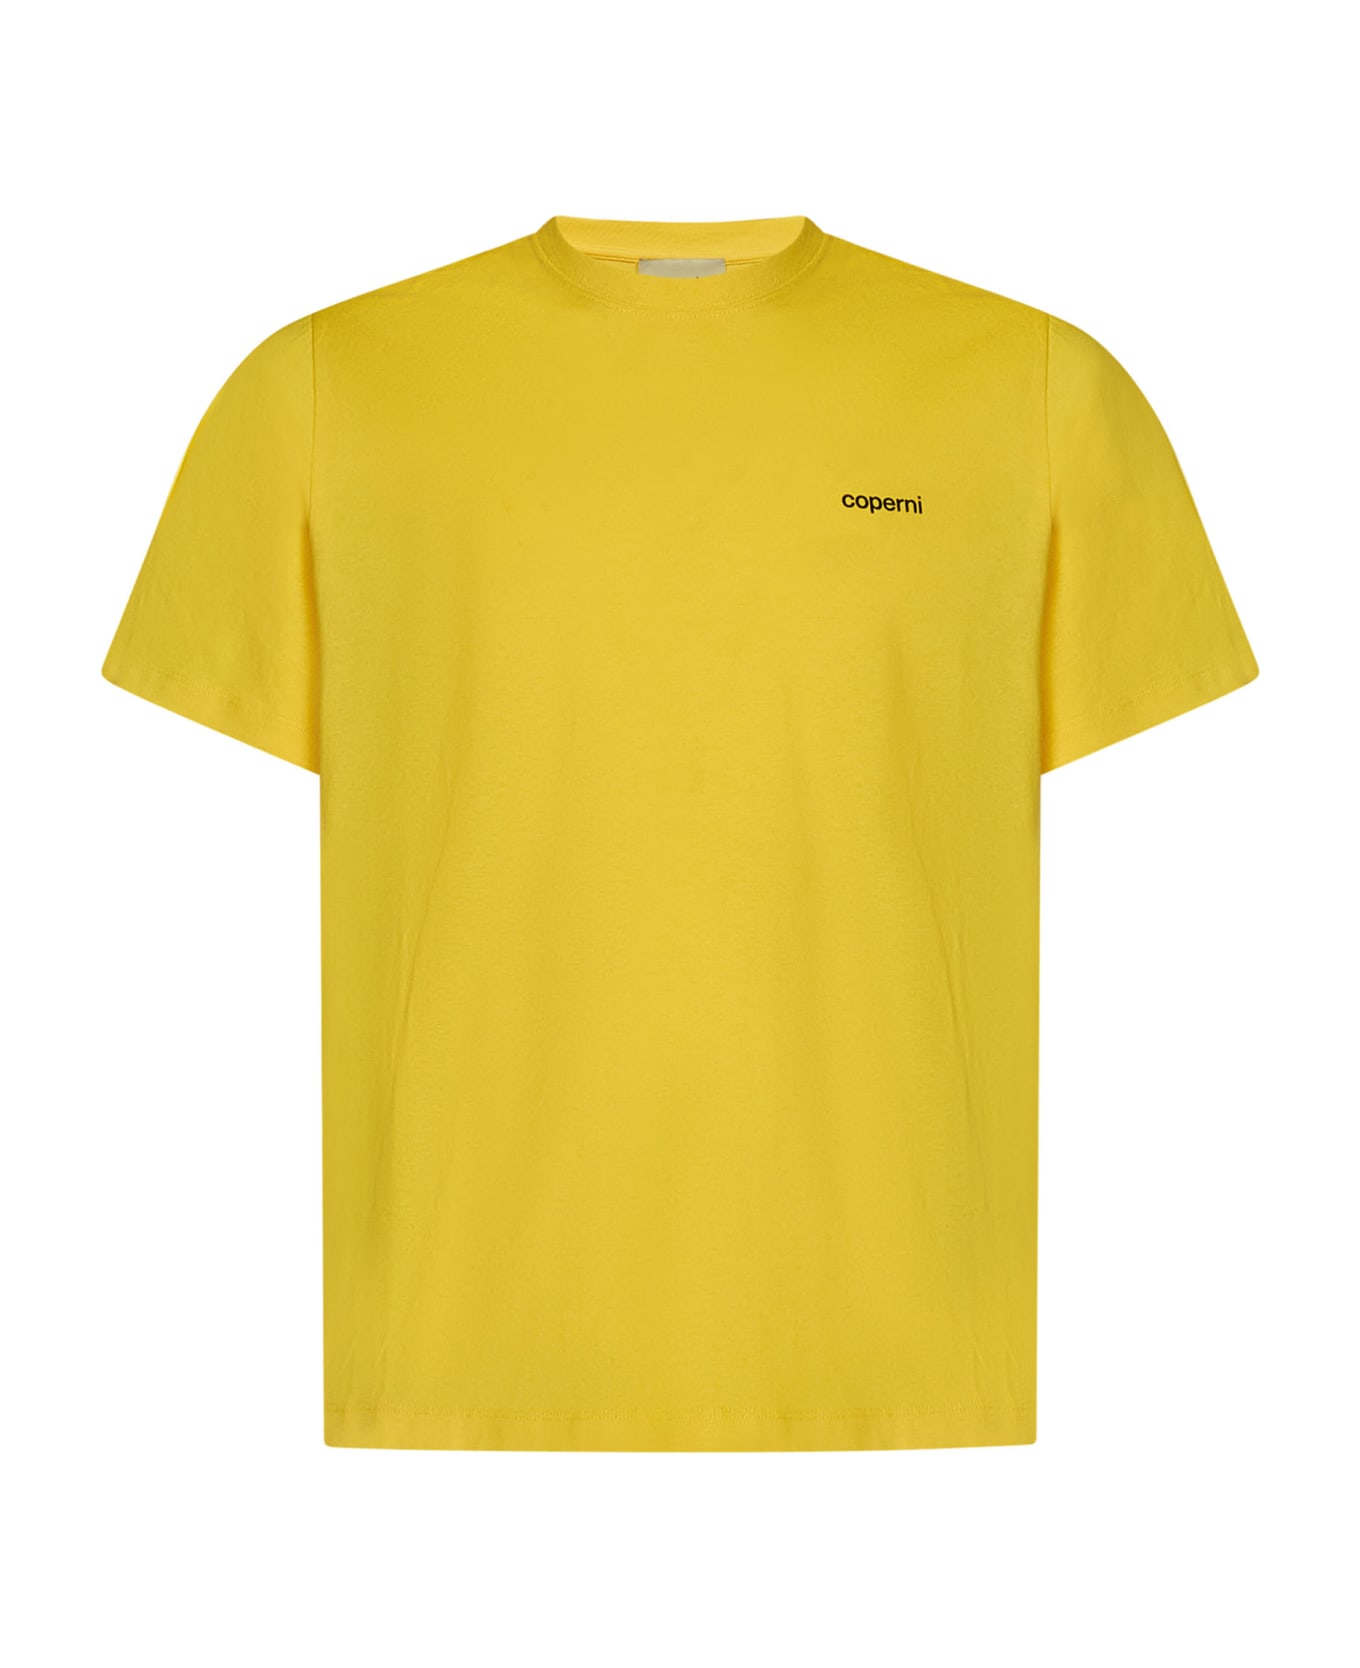 Coperni T-shirt - Yellow